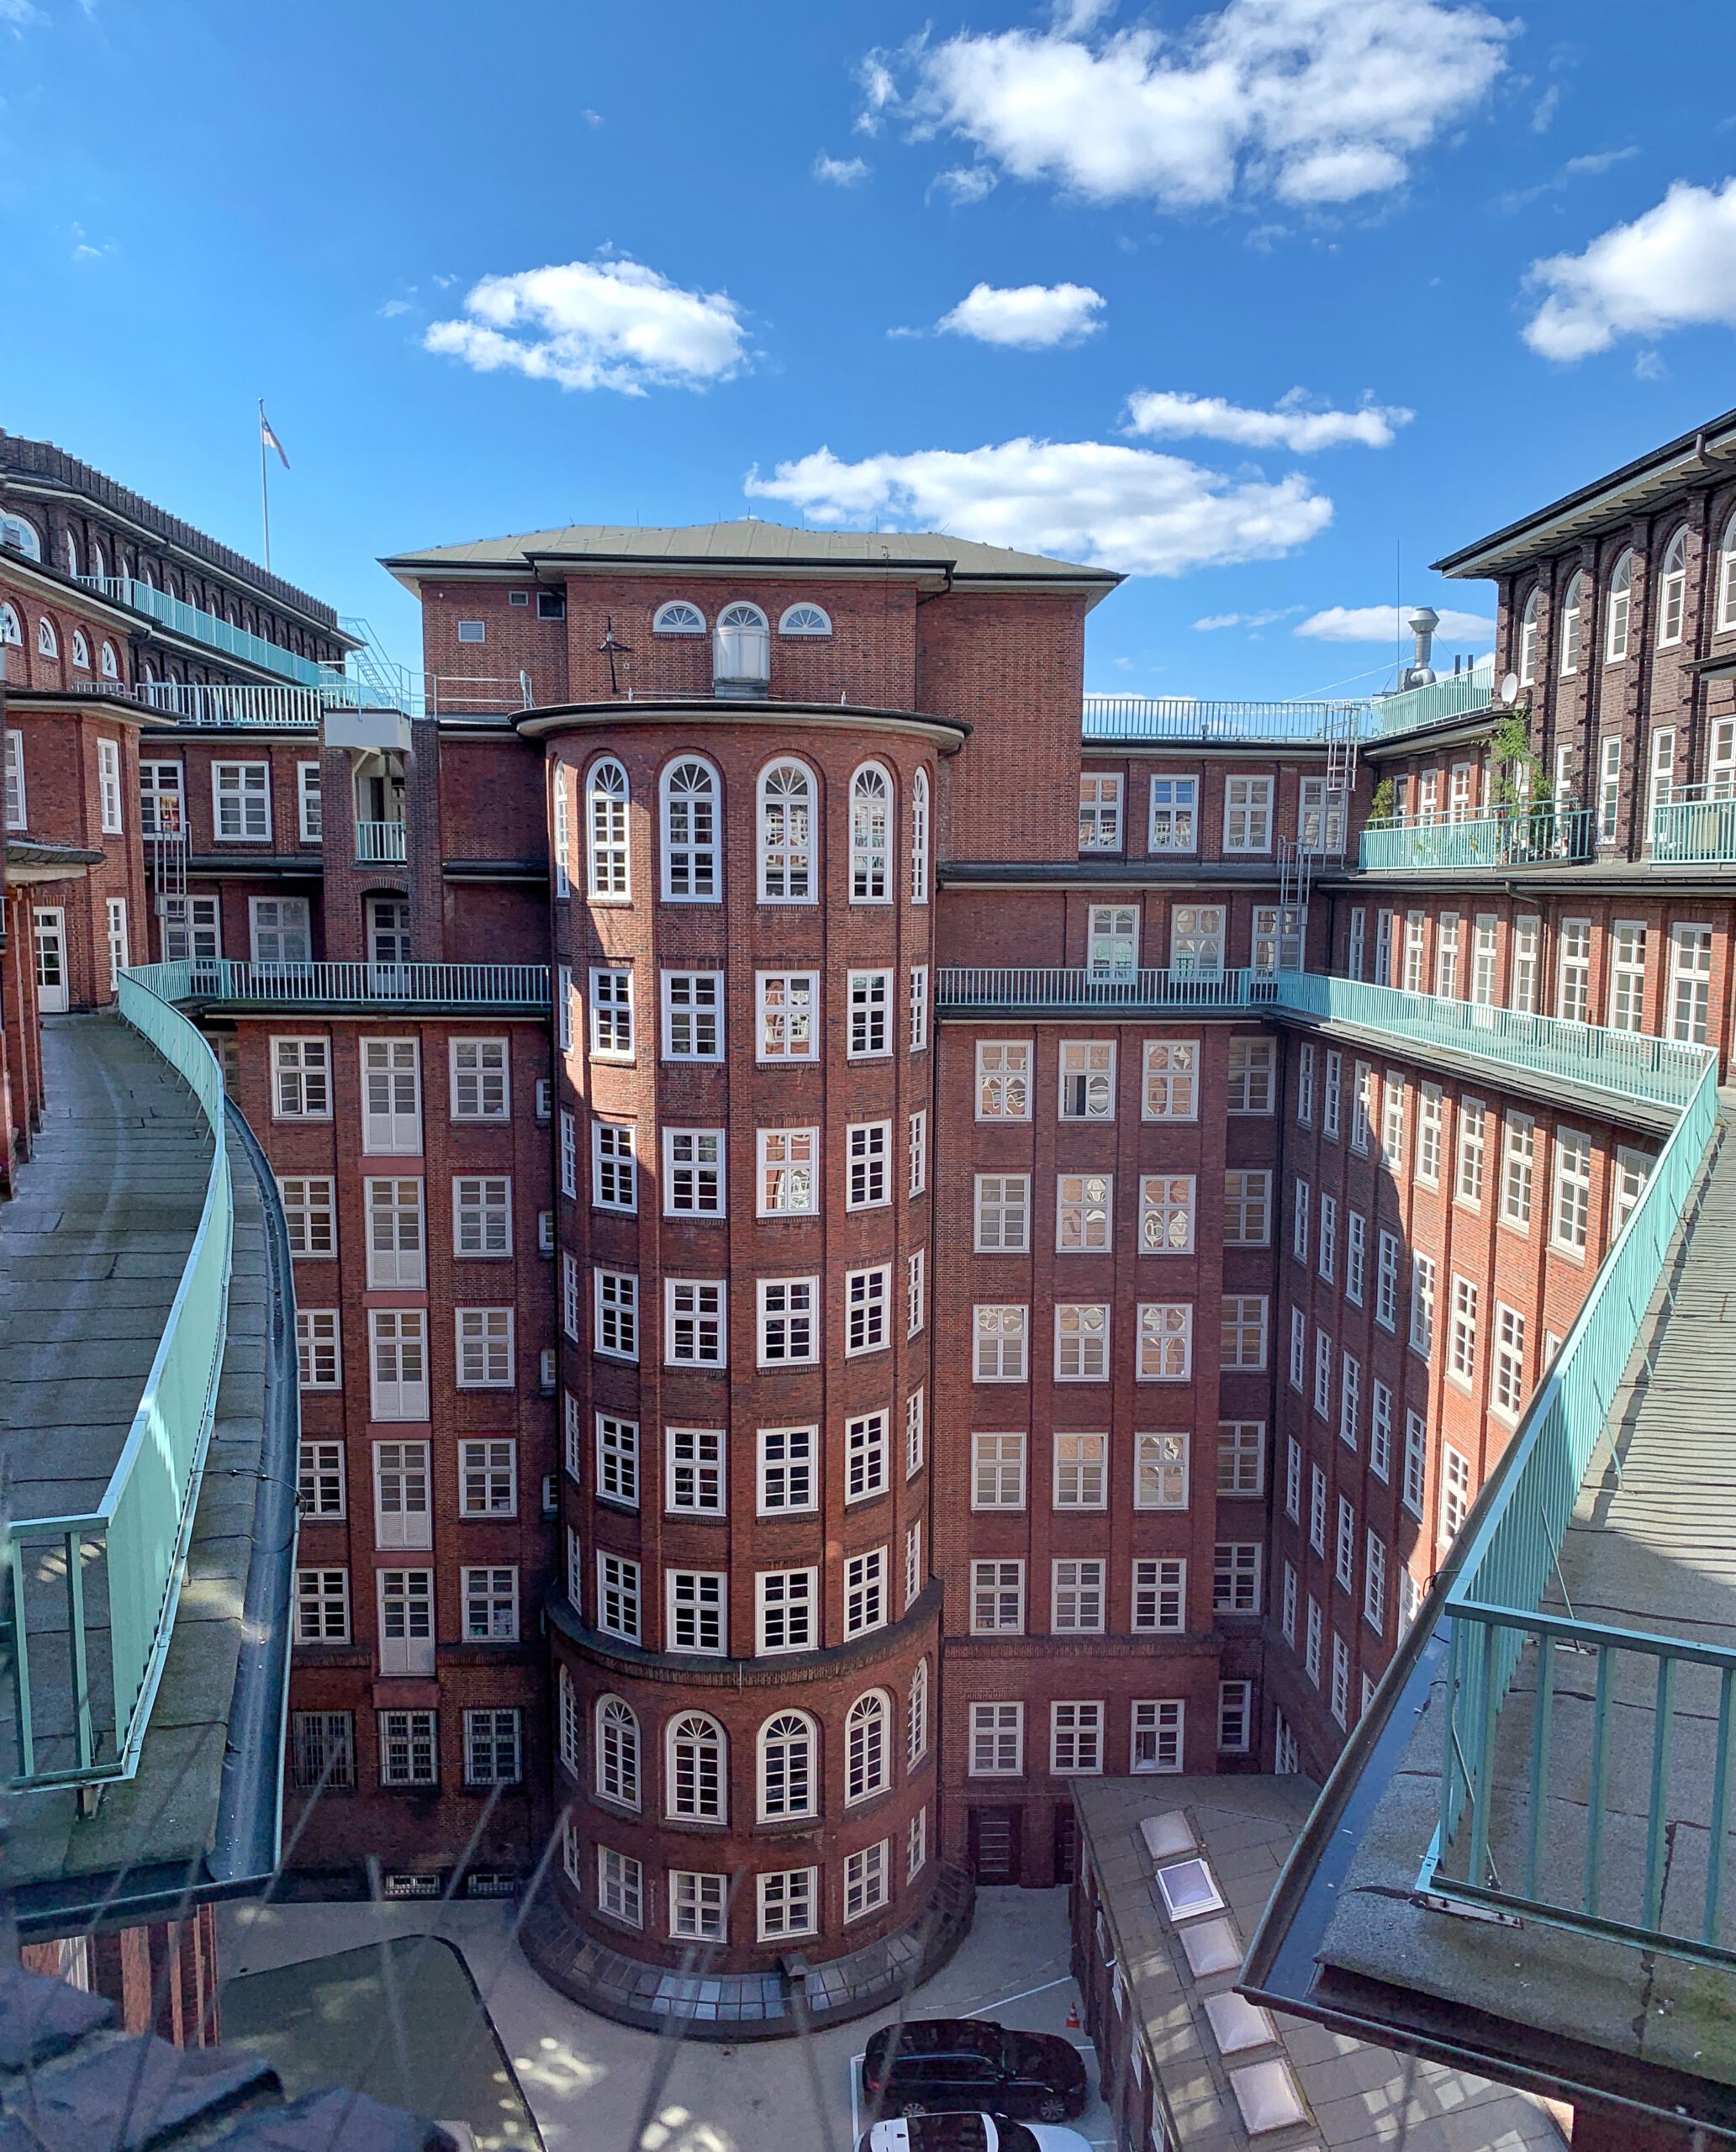 Hinterhöfe in Hamburg: Blick in den Innenhof des Chilehauses